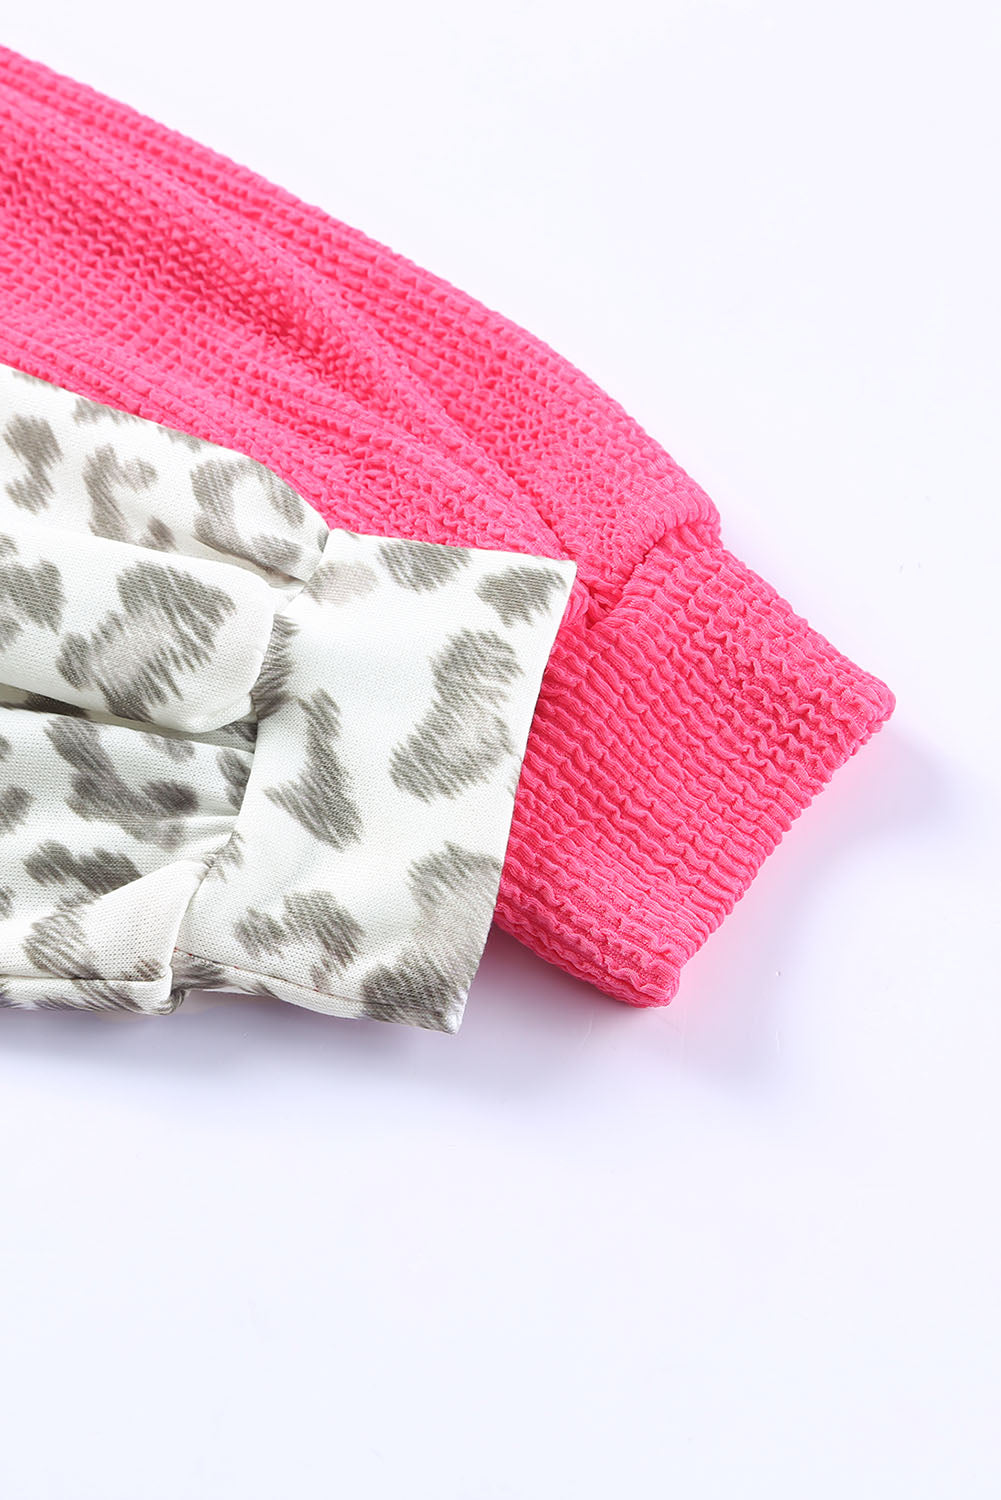 Cheetah Print Color Block Casual Pullover Long Sleeve Top